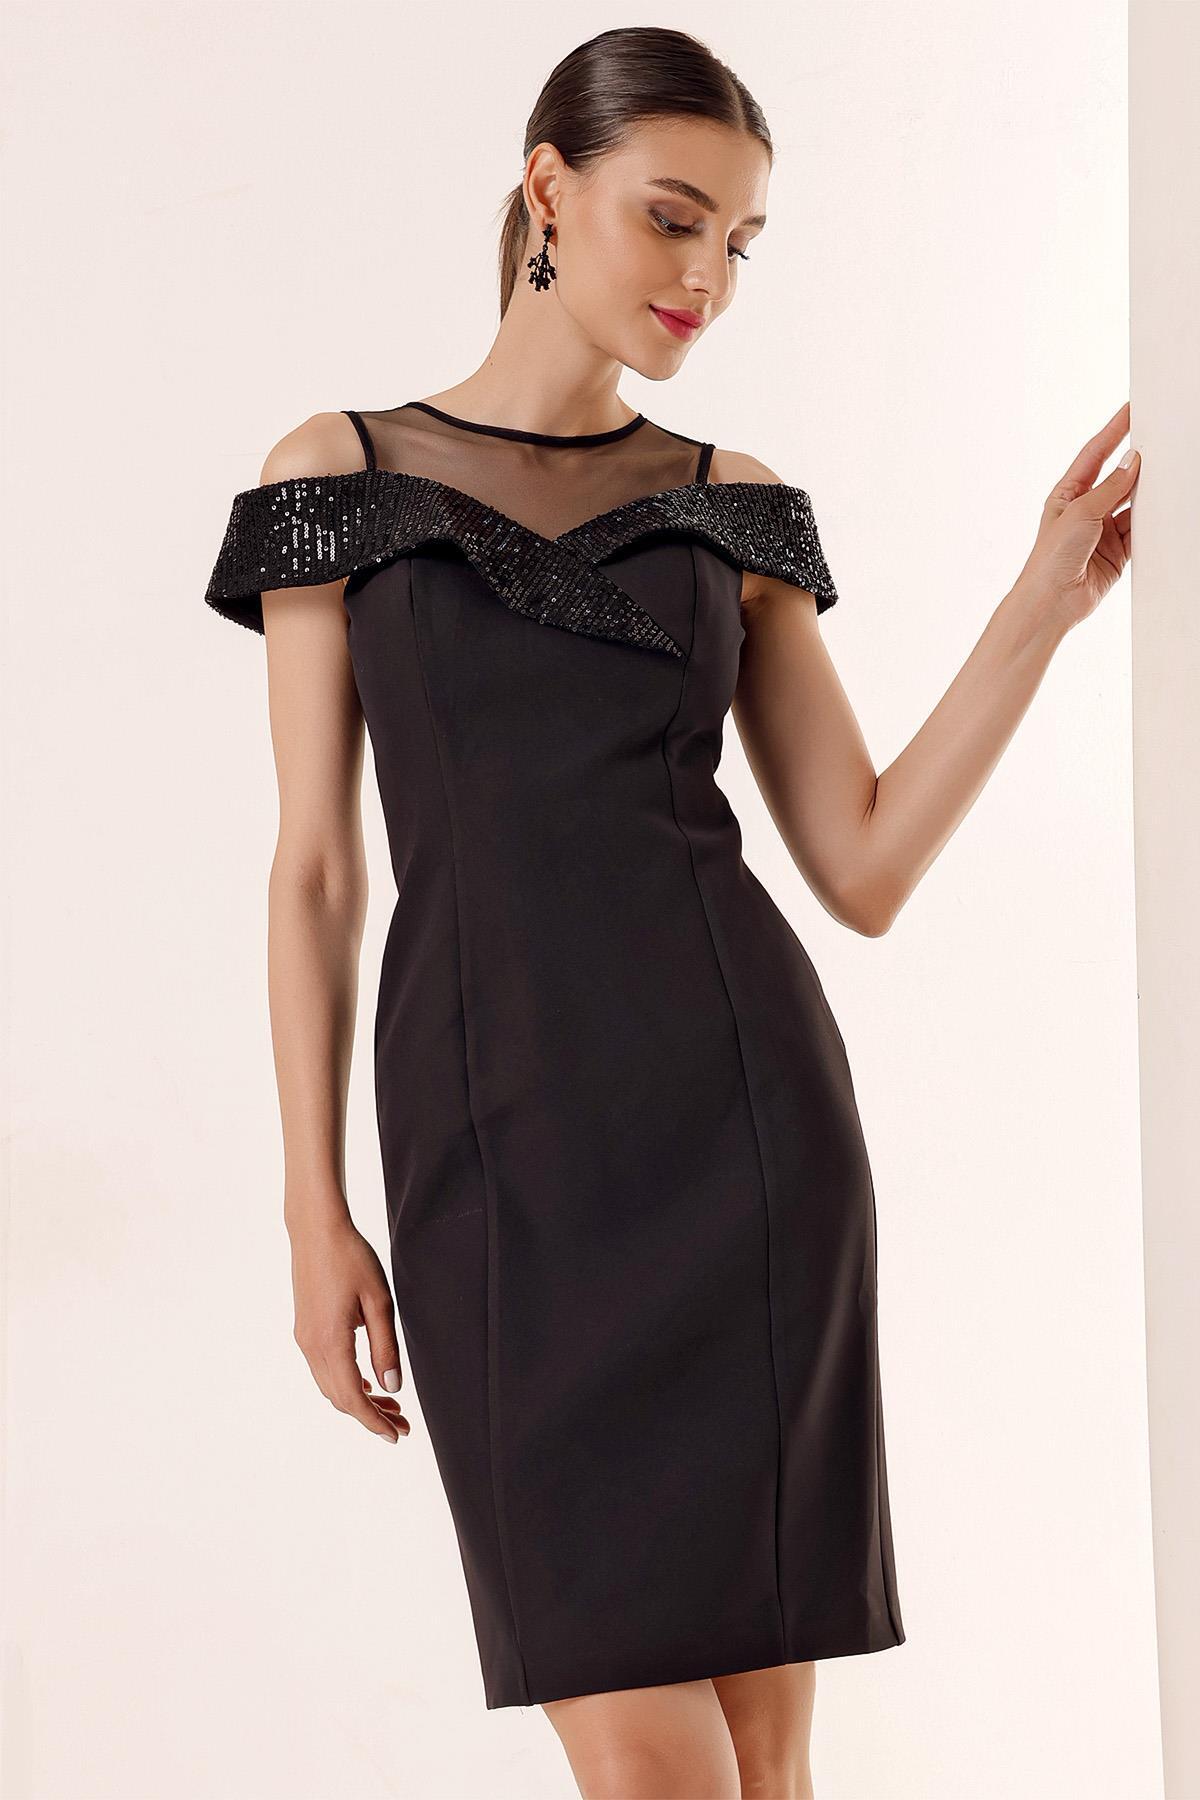 Levně By Saygı Top Transparent Tulle Collar Sequined Sequin Dress